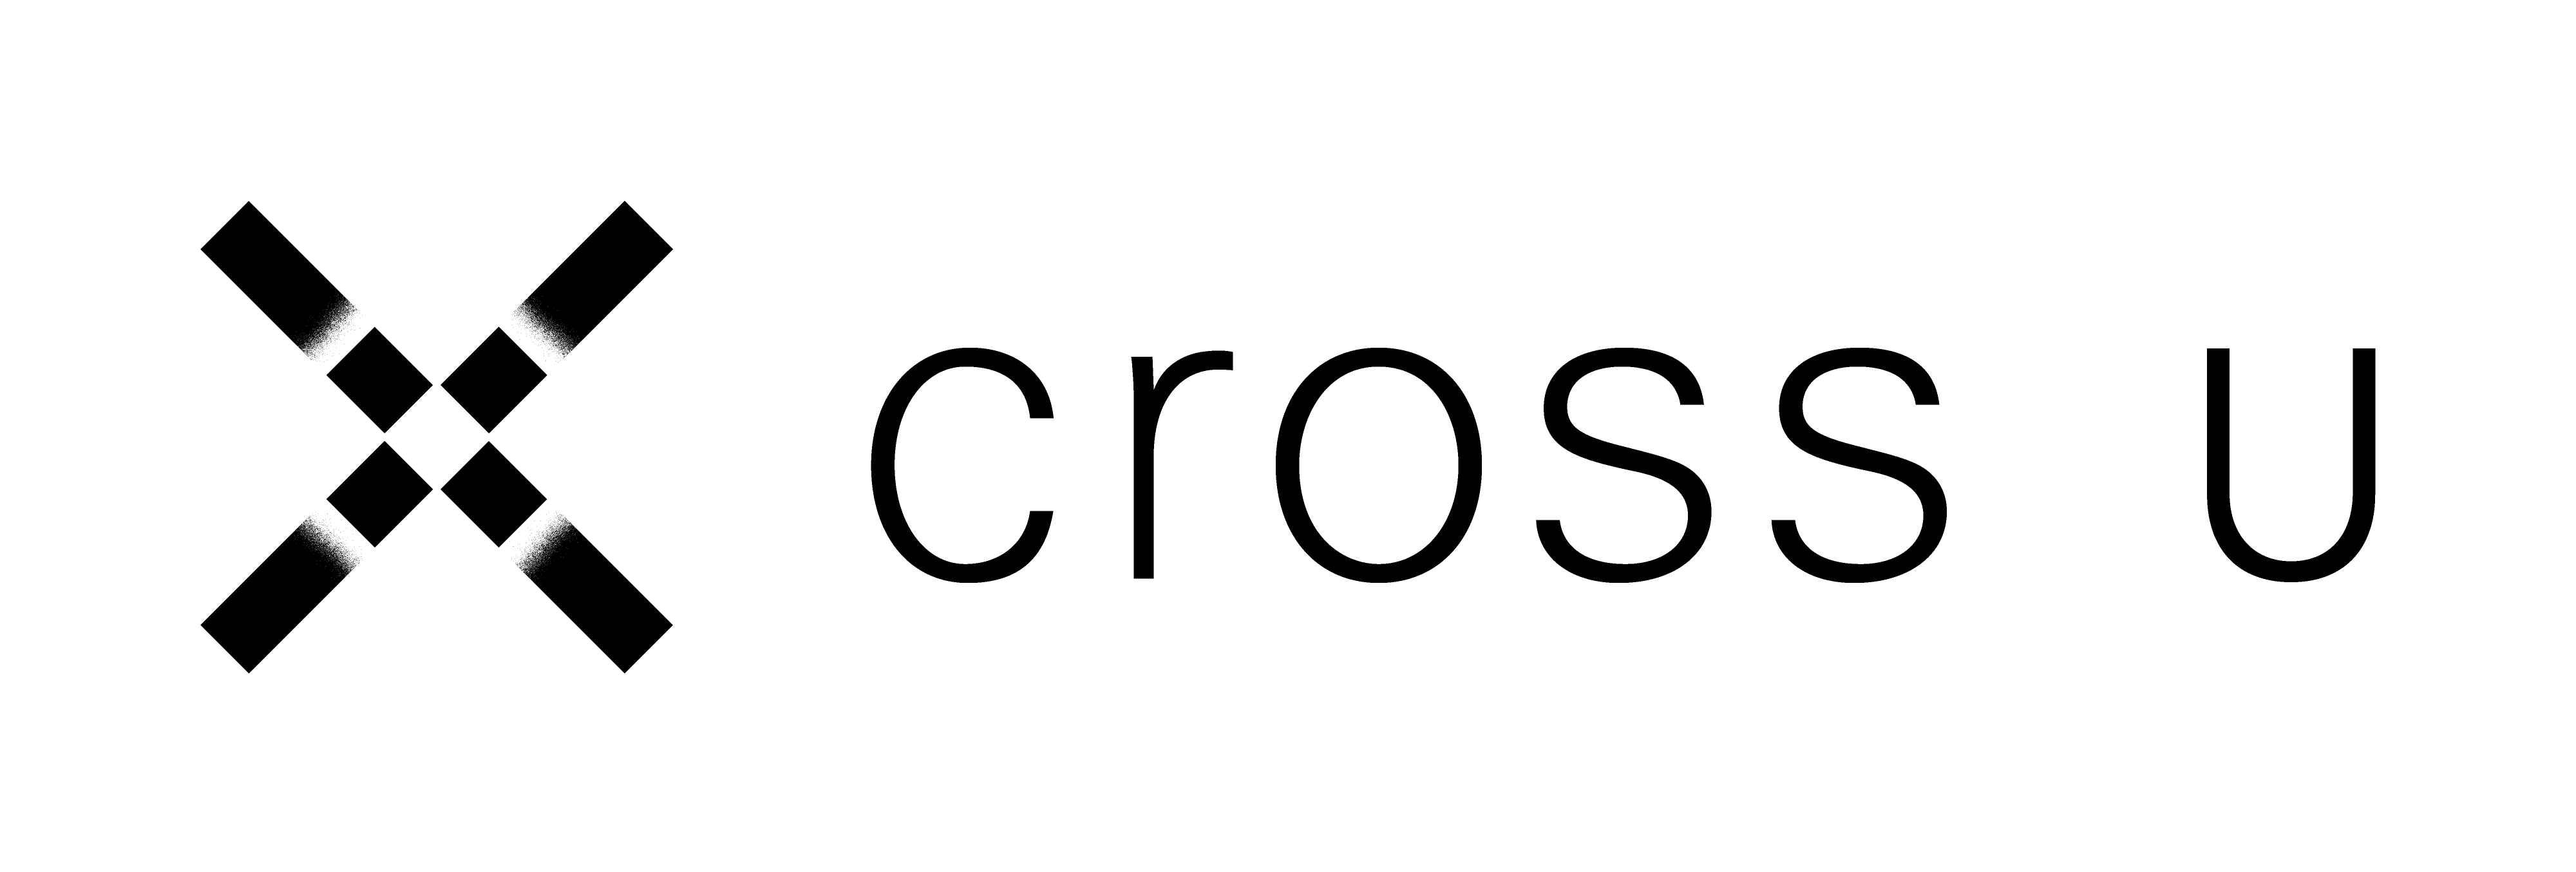 crossU logo black